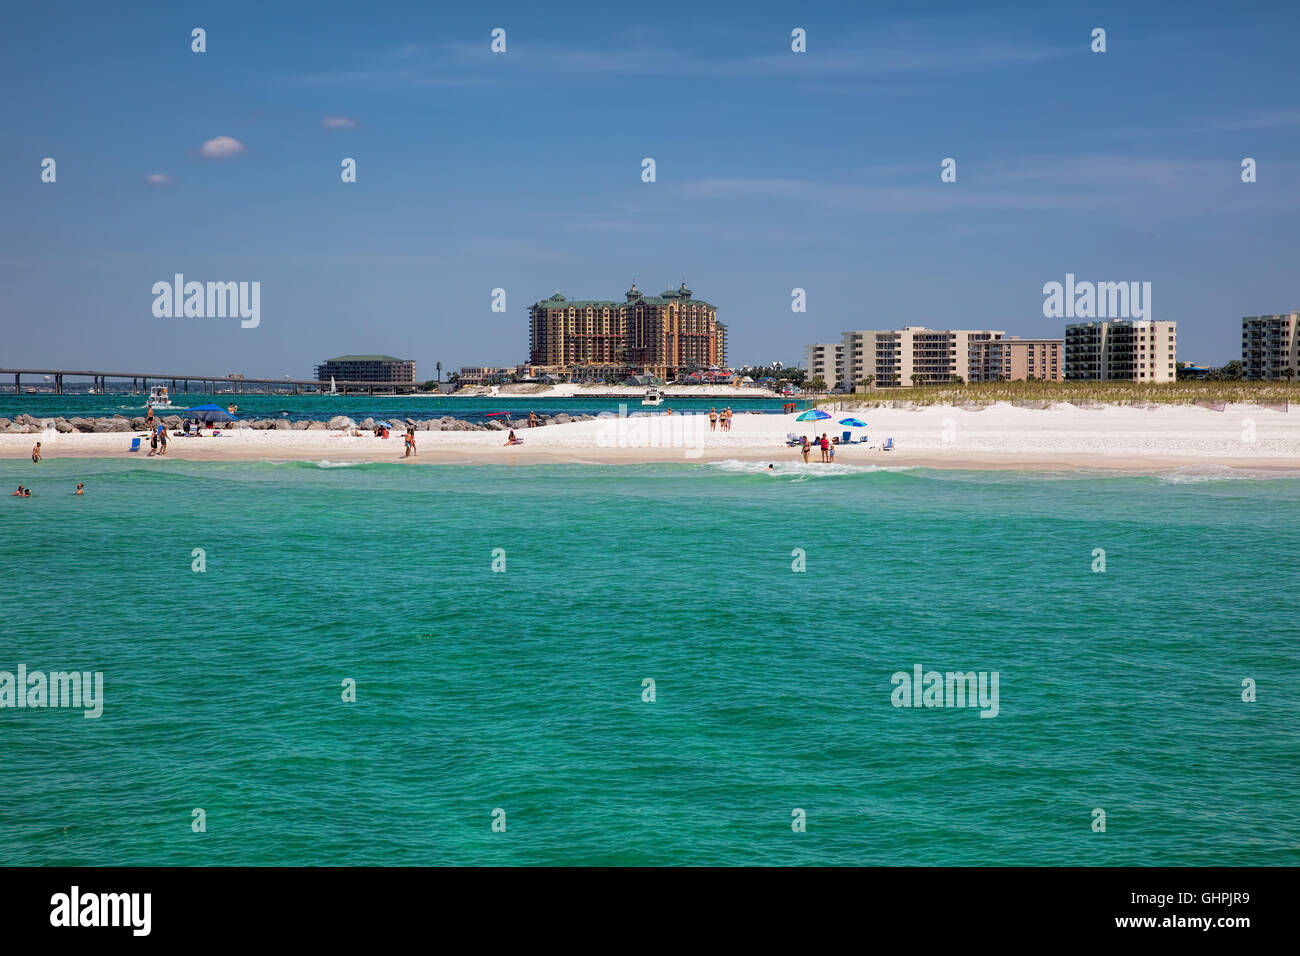 Summertime on the beach in Destin Florida Stock Photo